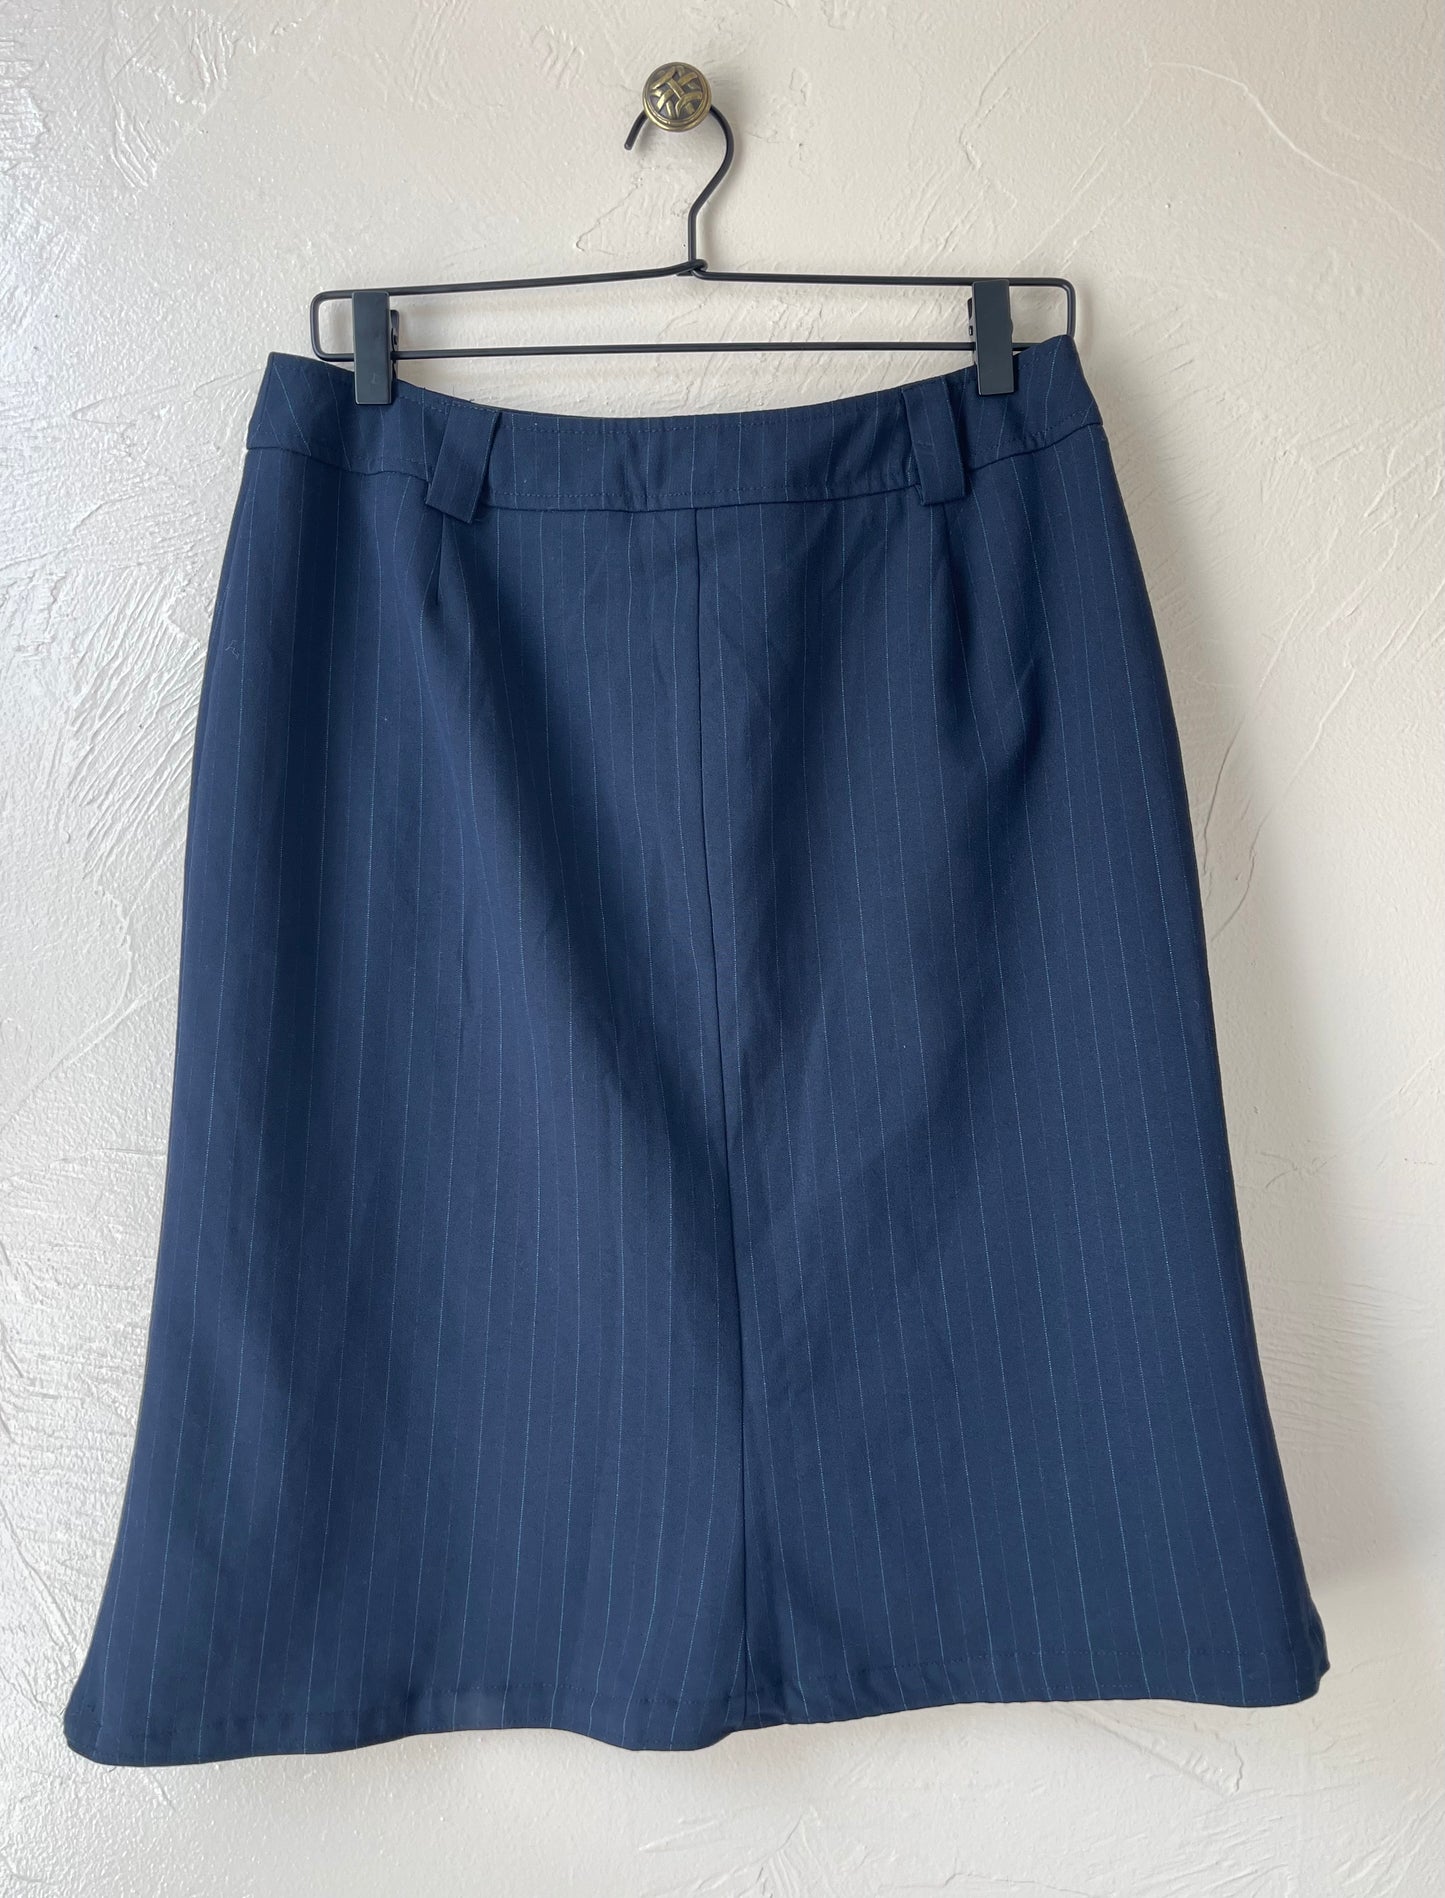 Pinstripe Blue Skirt